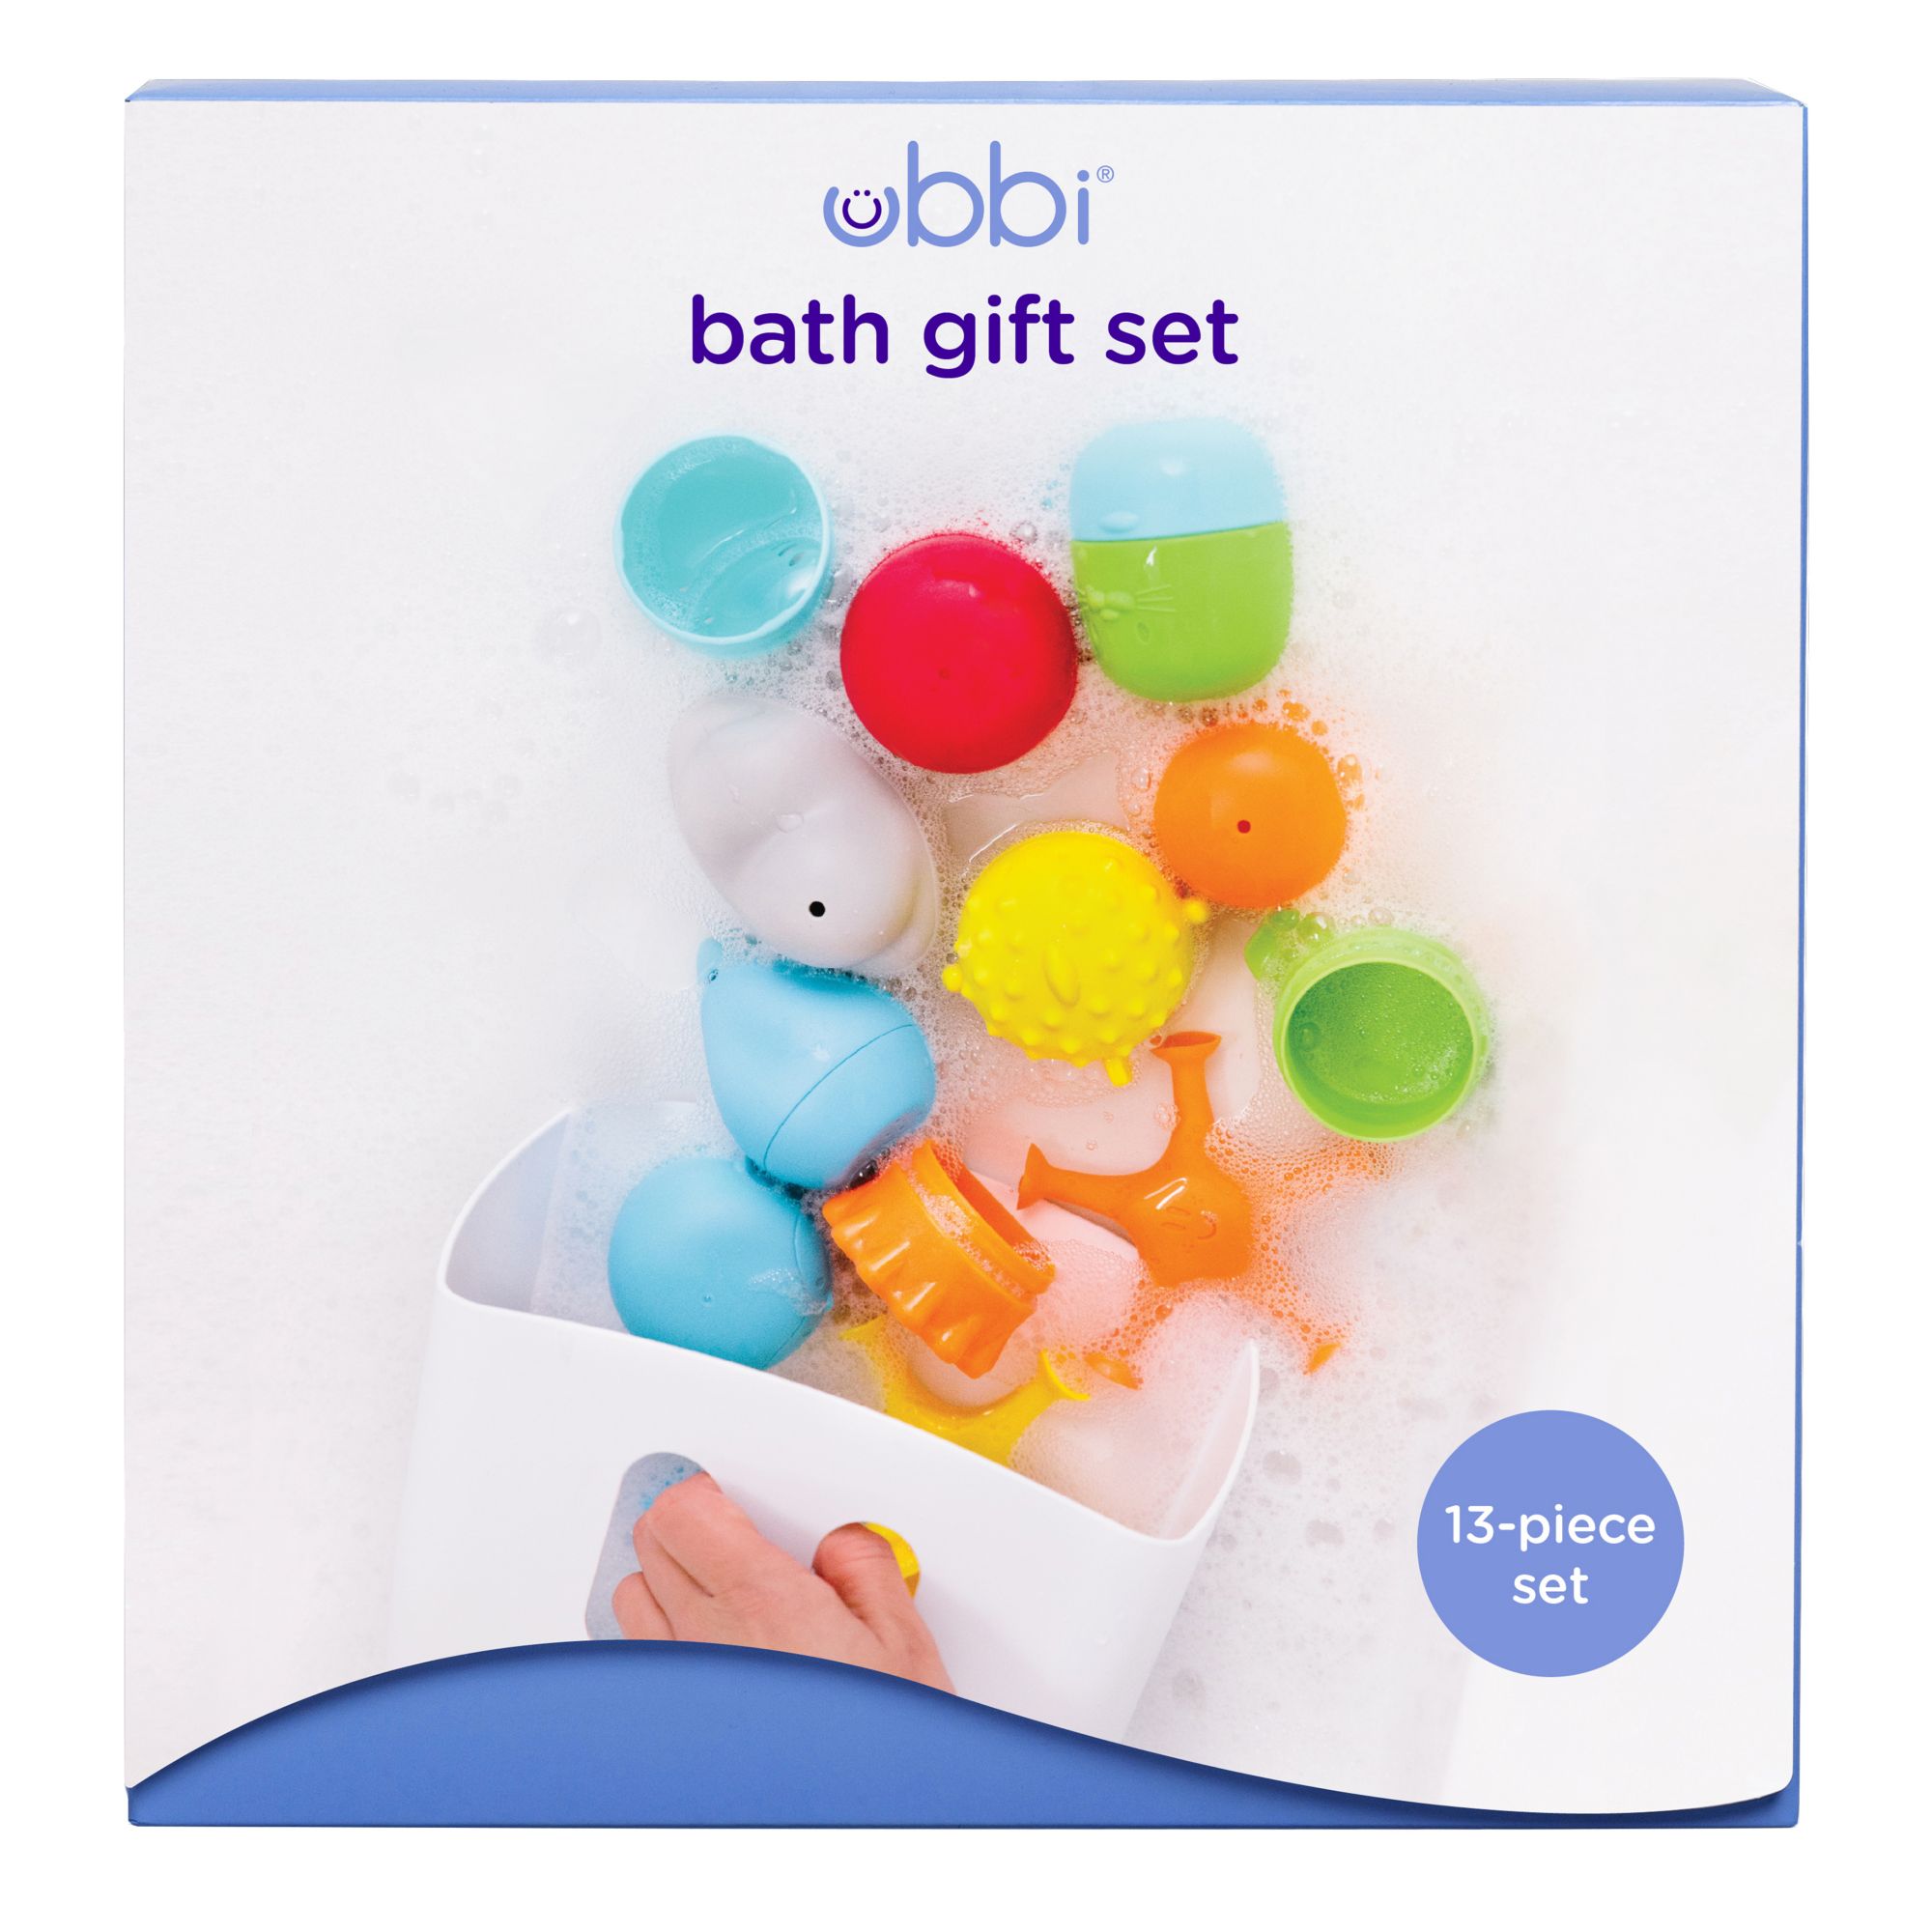 Club　BJ's　Gift　Set　Bath　Ubbi　Wholesale